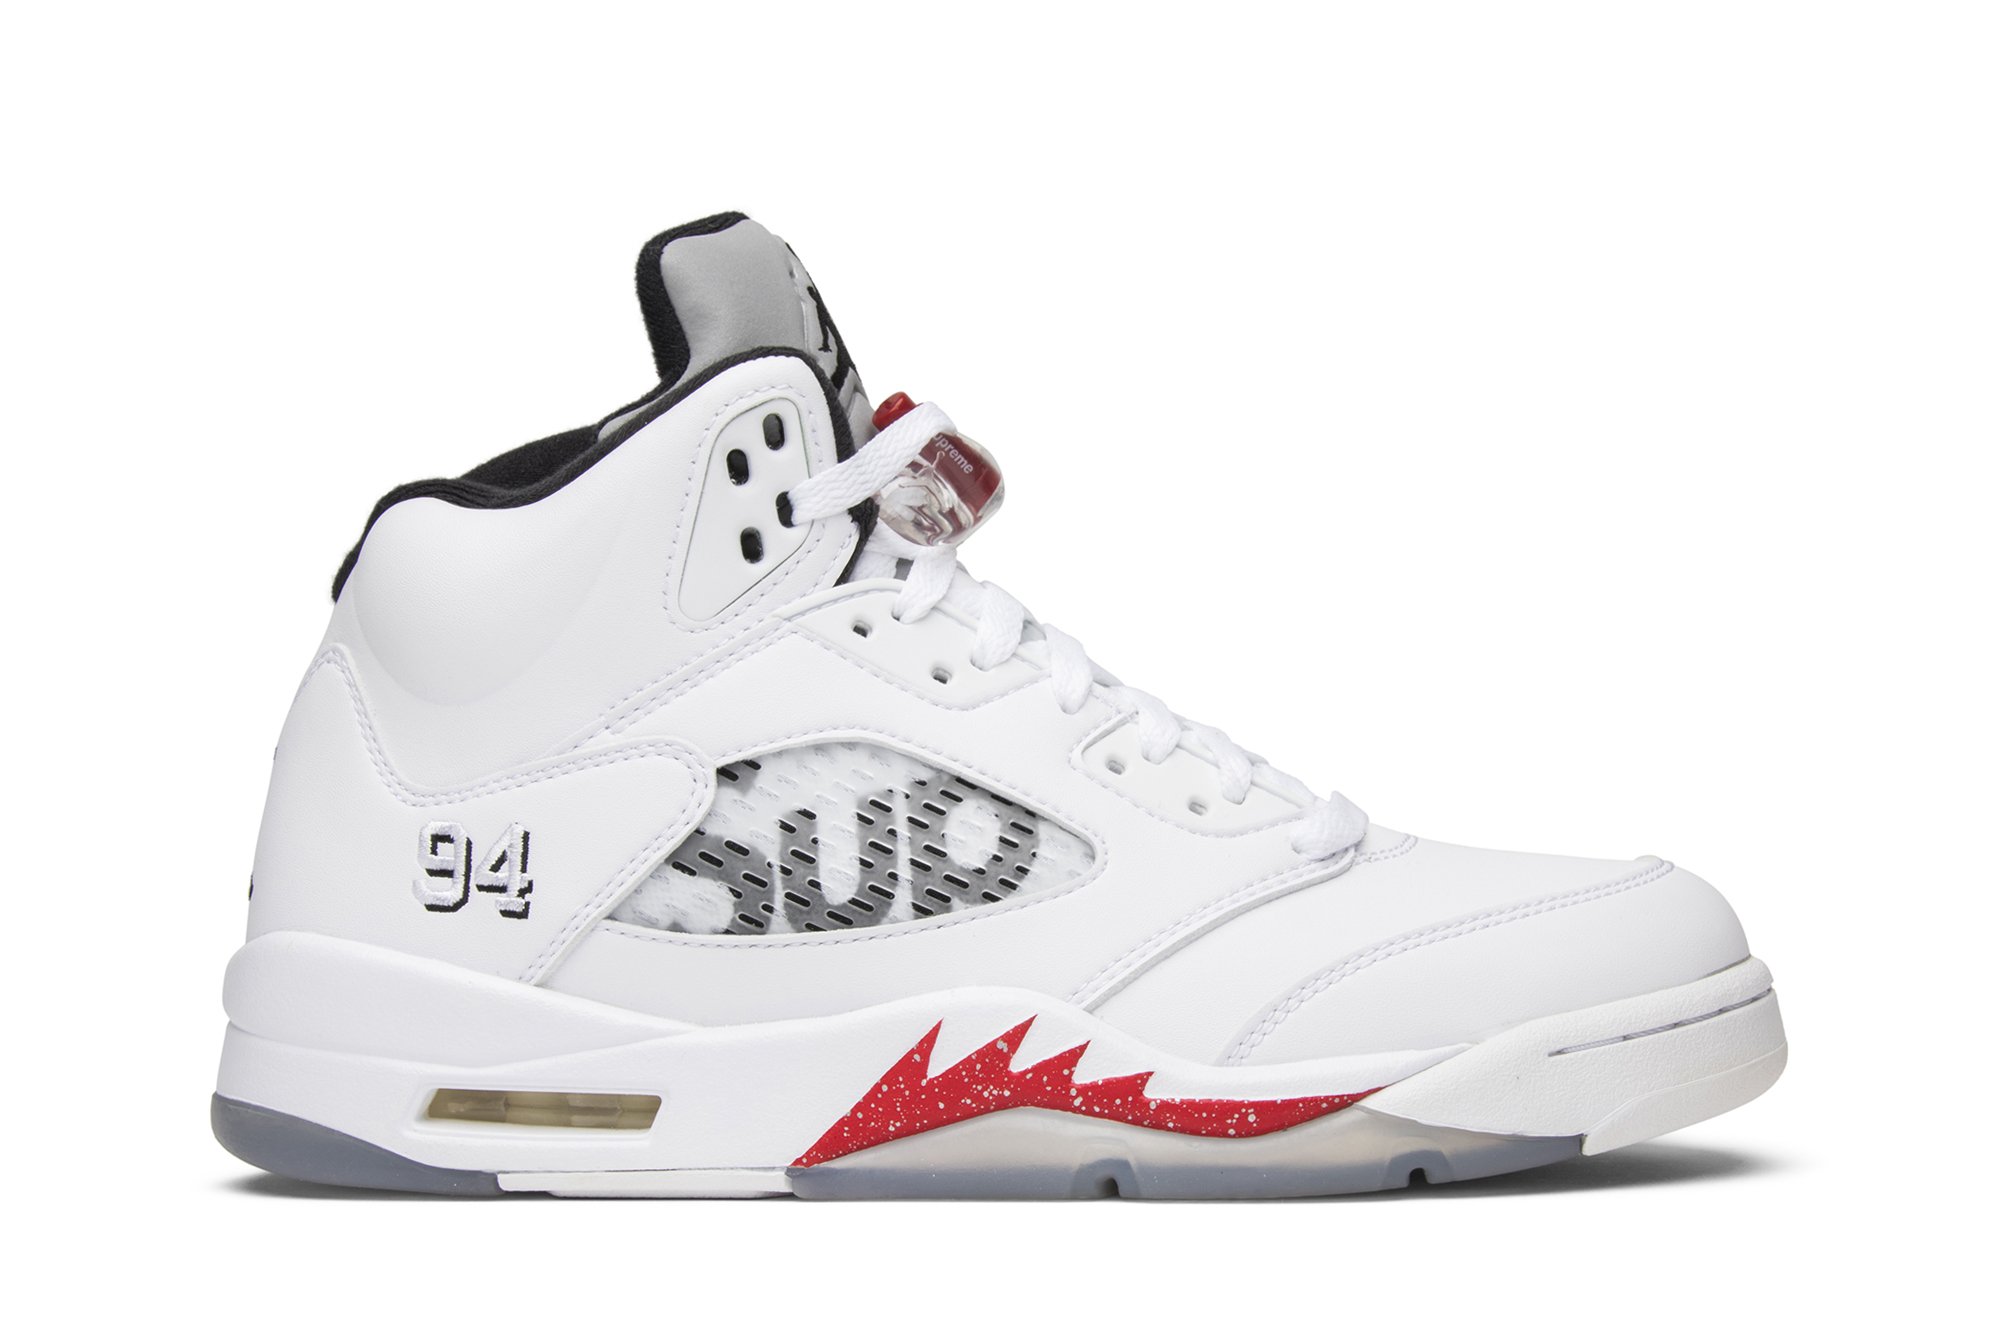 Supreme x Air Jordan 5 Retro 'White'